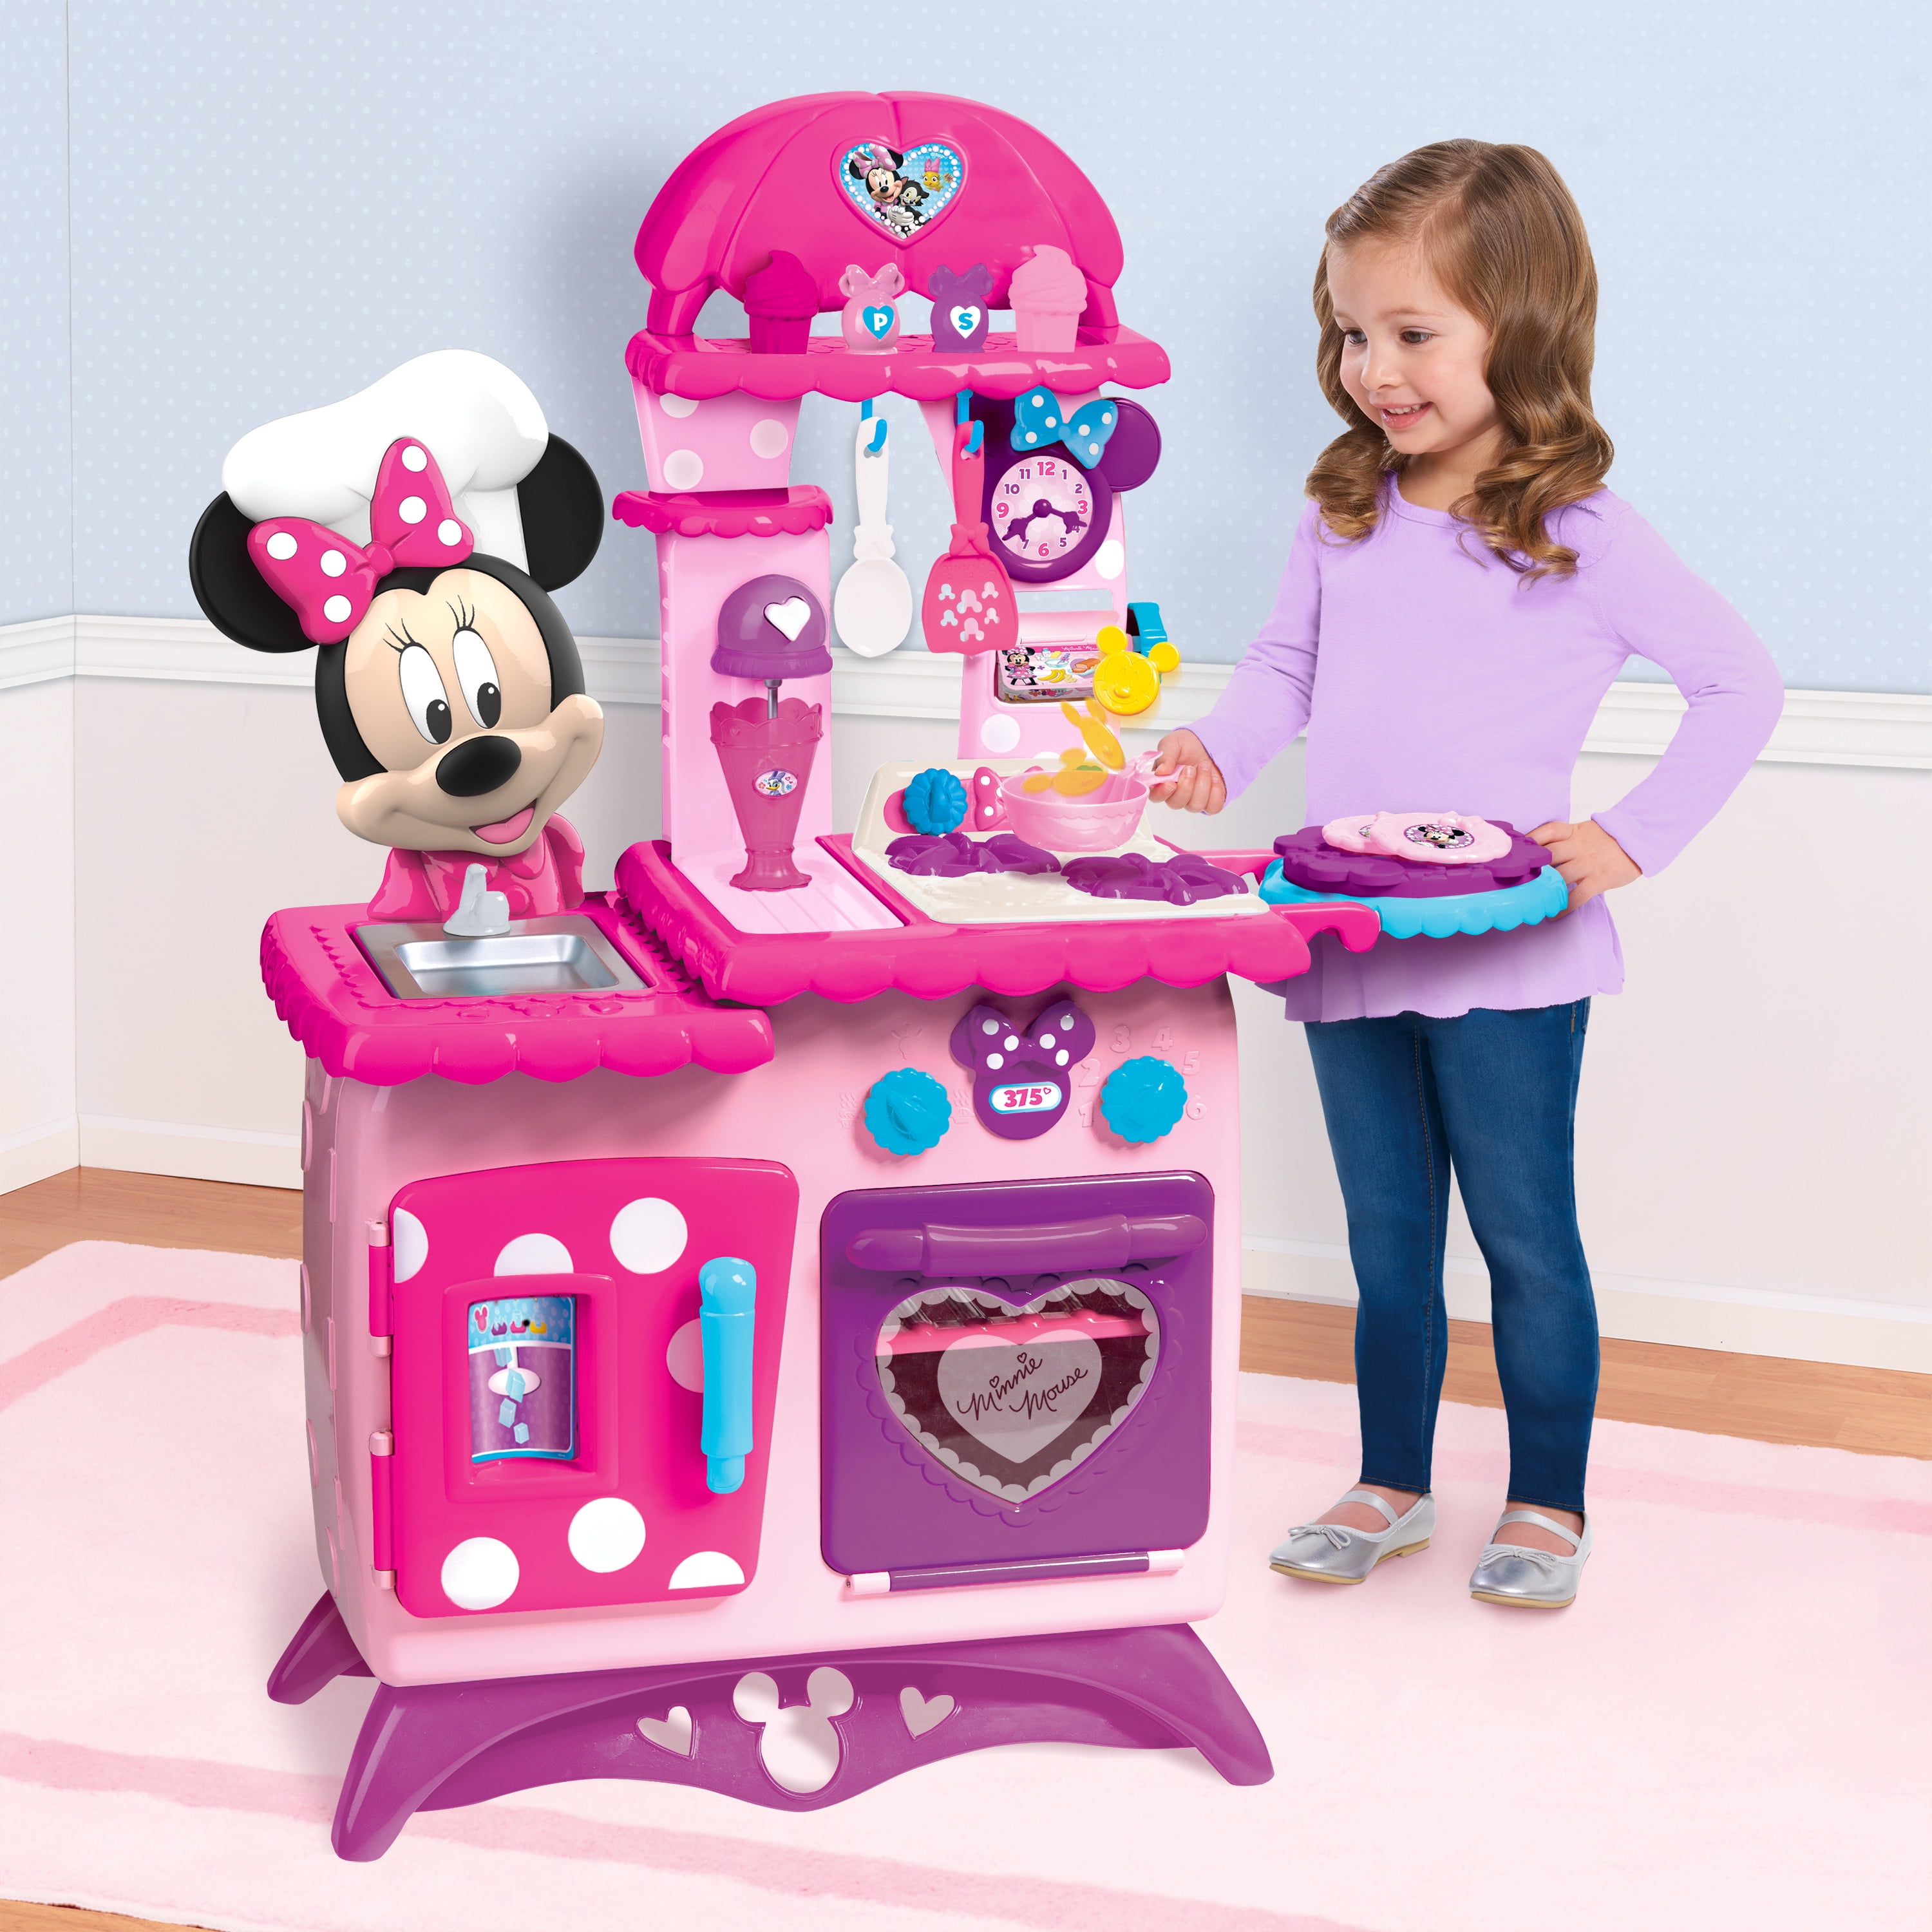 Cra-Z-Art Disney Junior Minnie Mouse Deluxe Kitchen Set